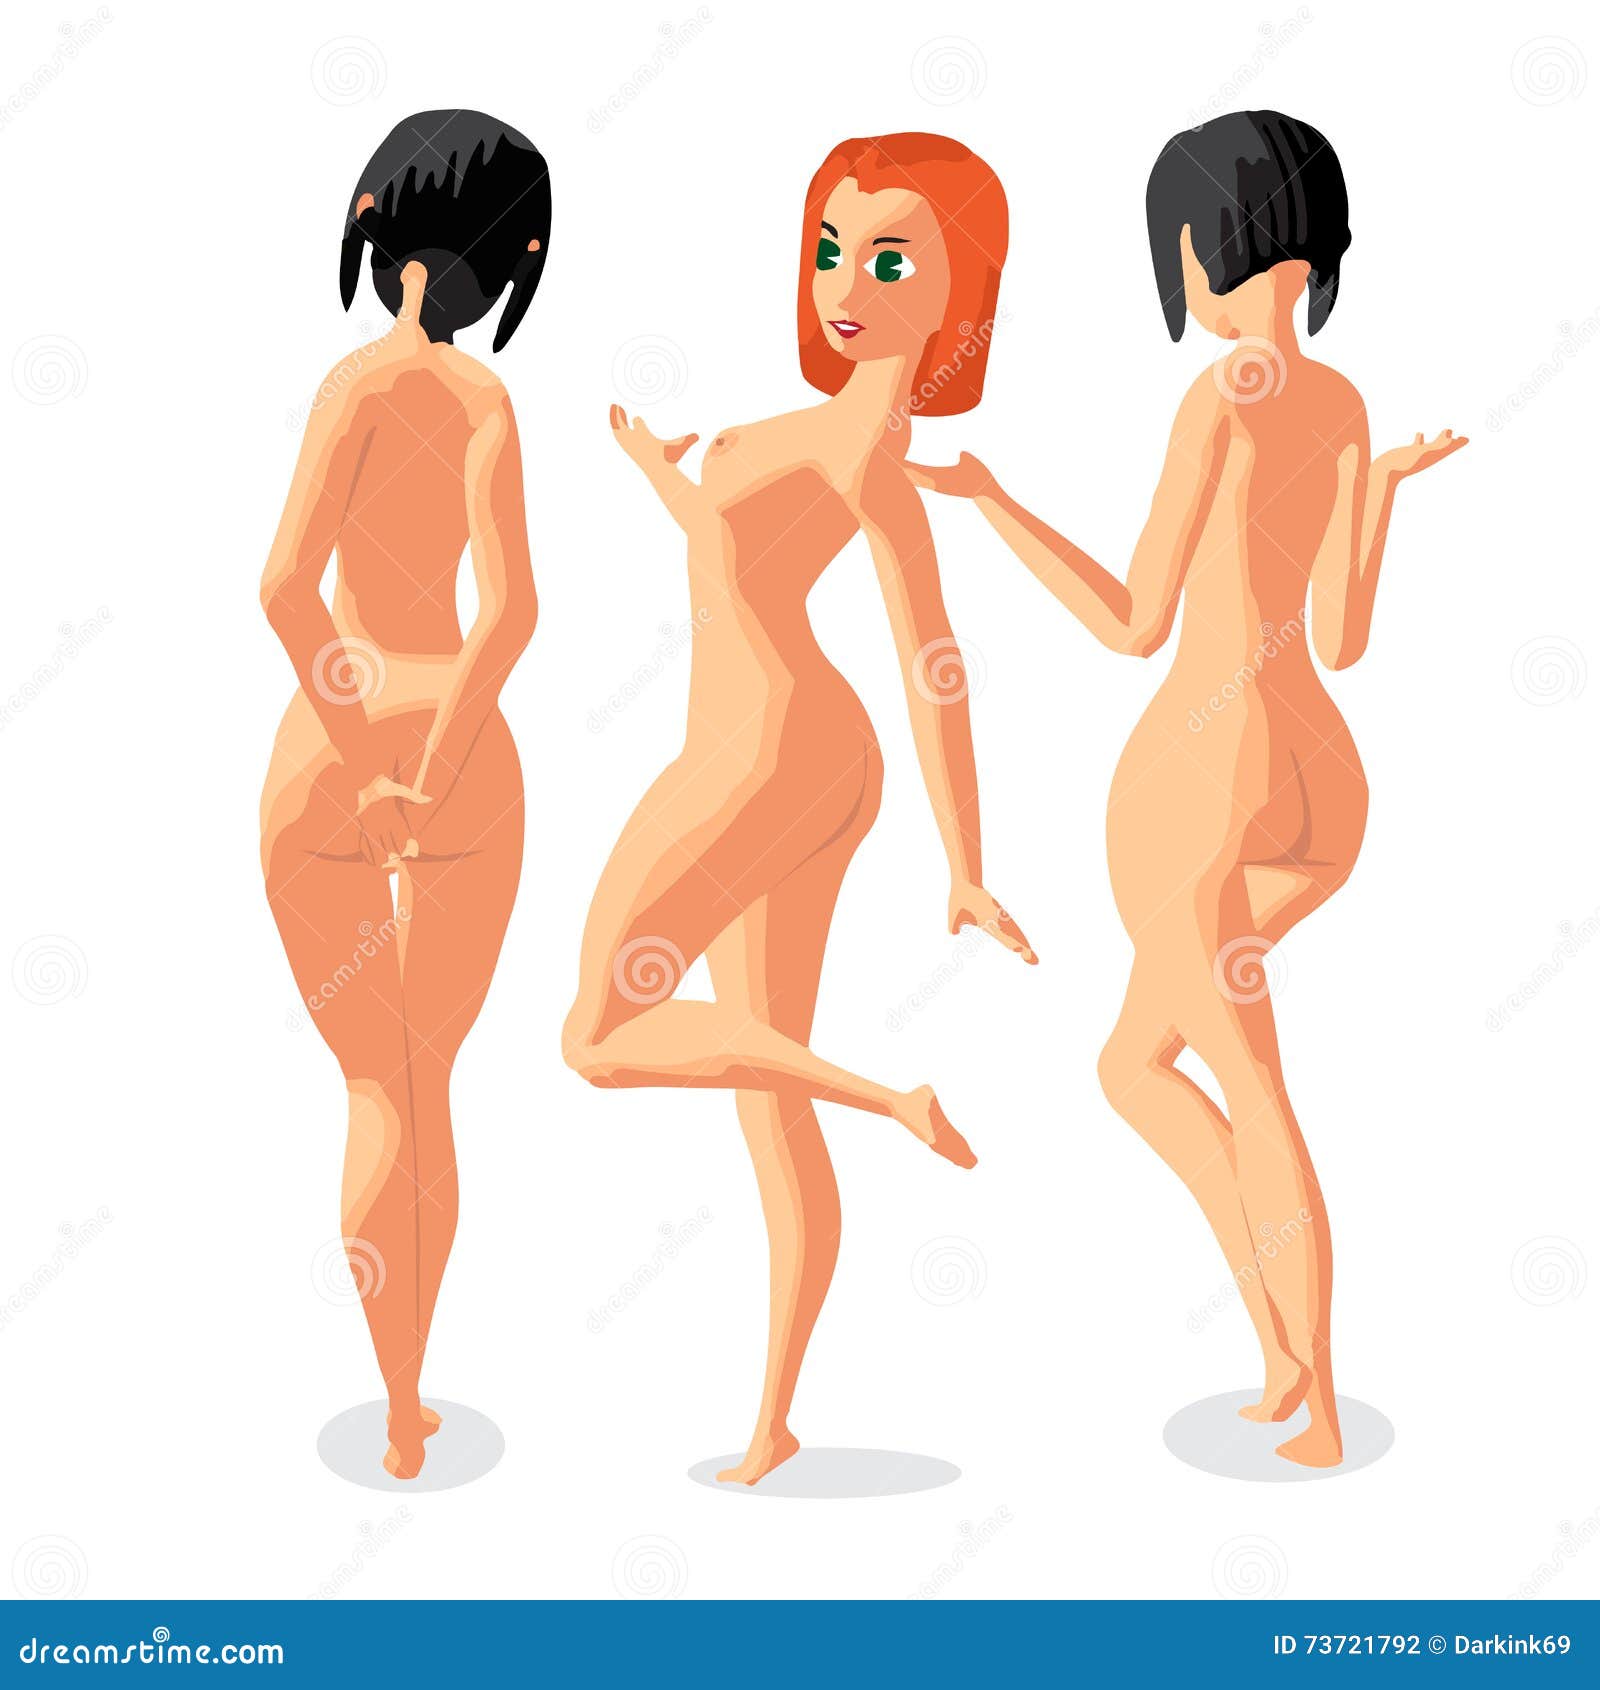 Girls nudist pic